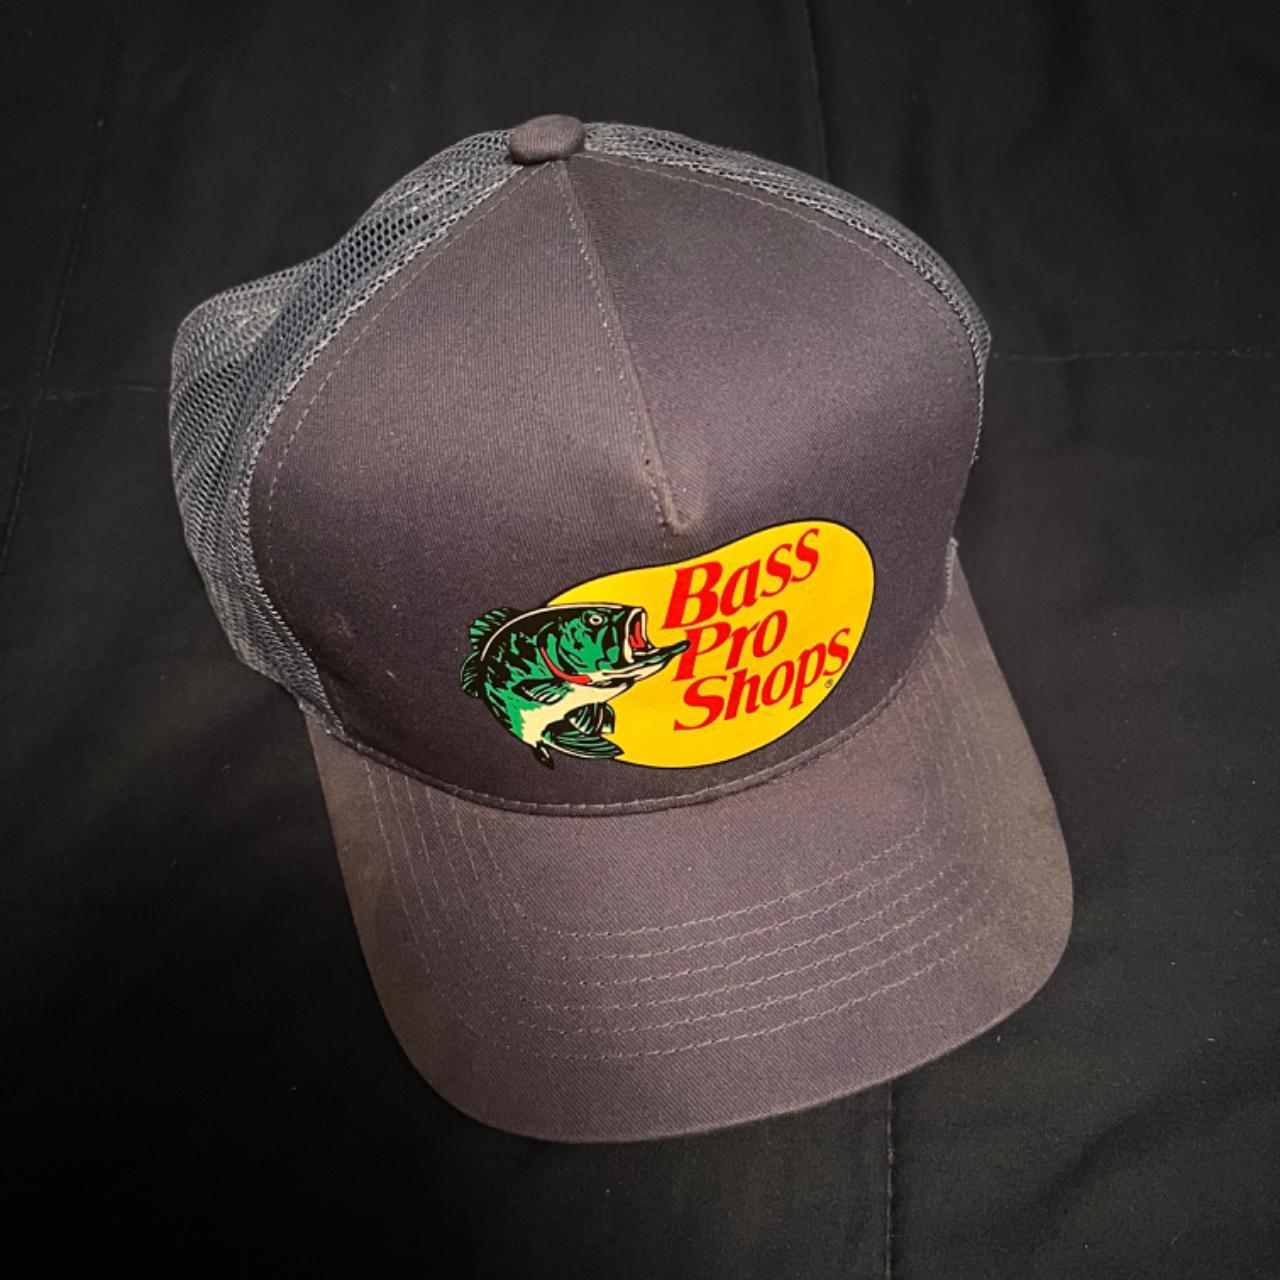 Bass pro shop hat. Used, worn once - Depop